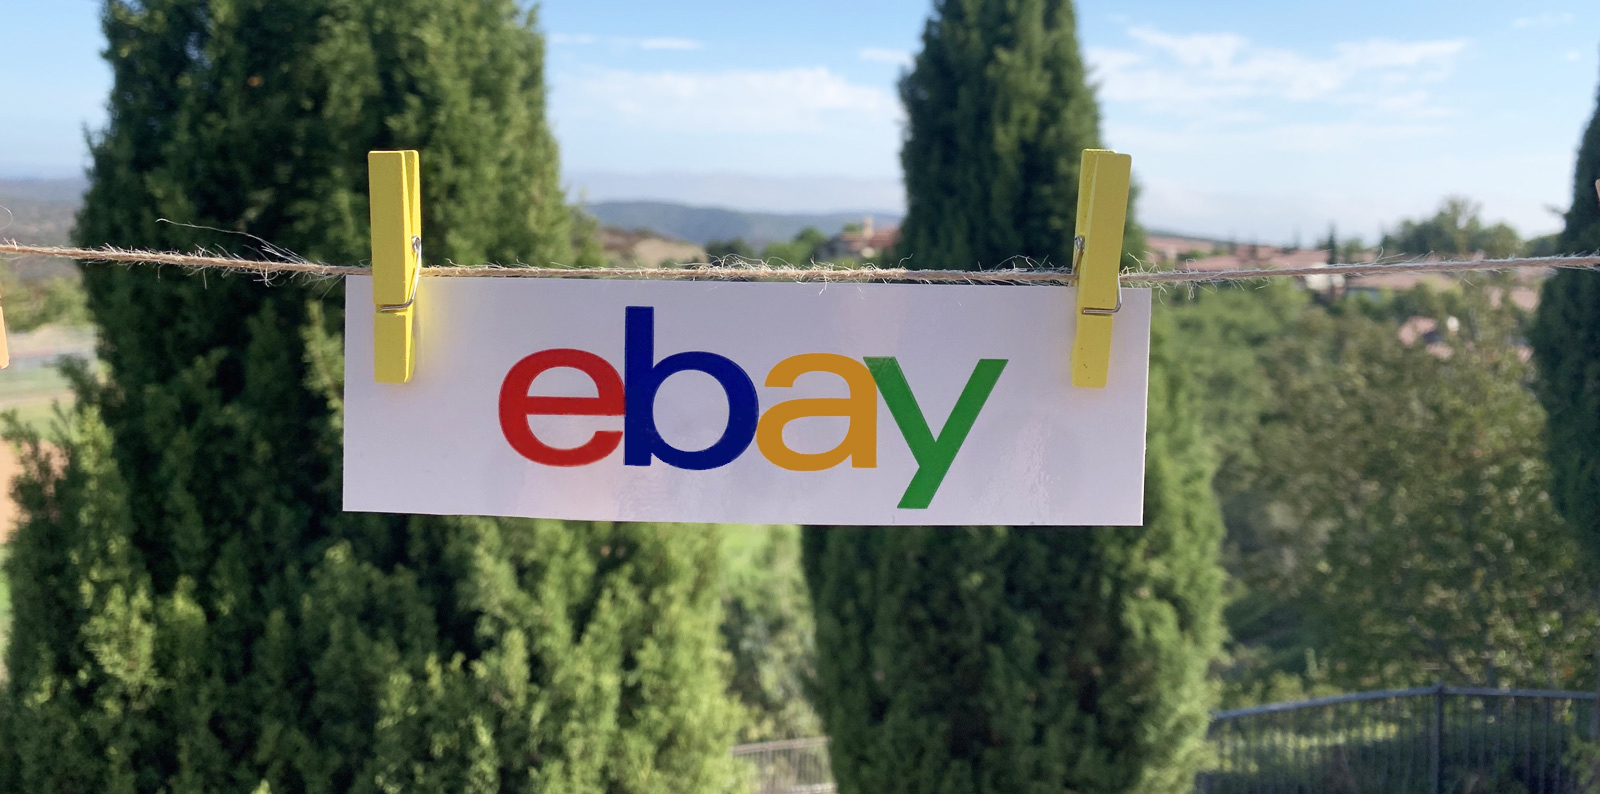 eBay Coupons